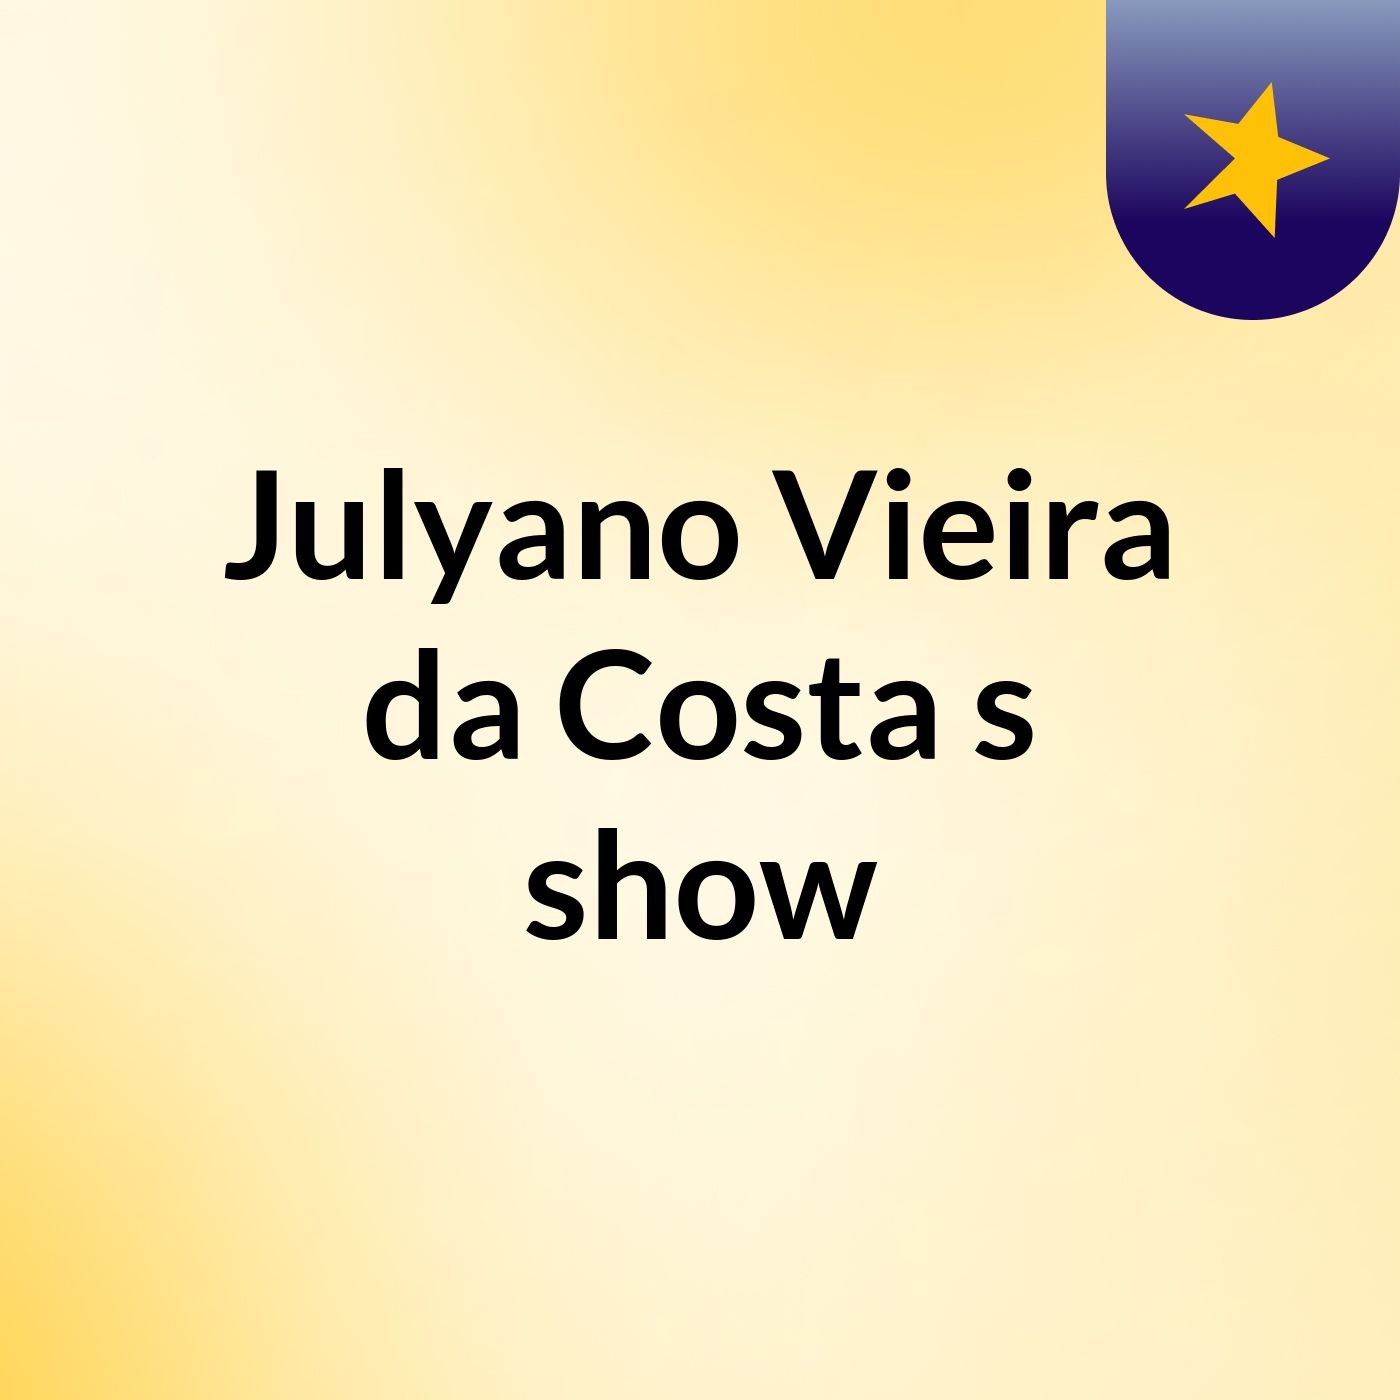 Julyano Vieira da Costa's show